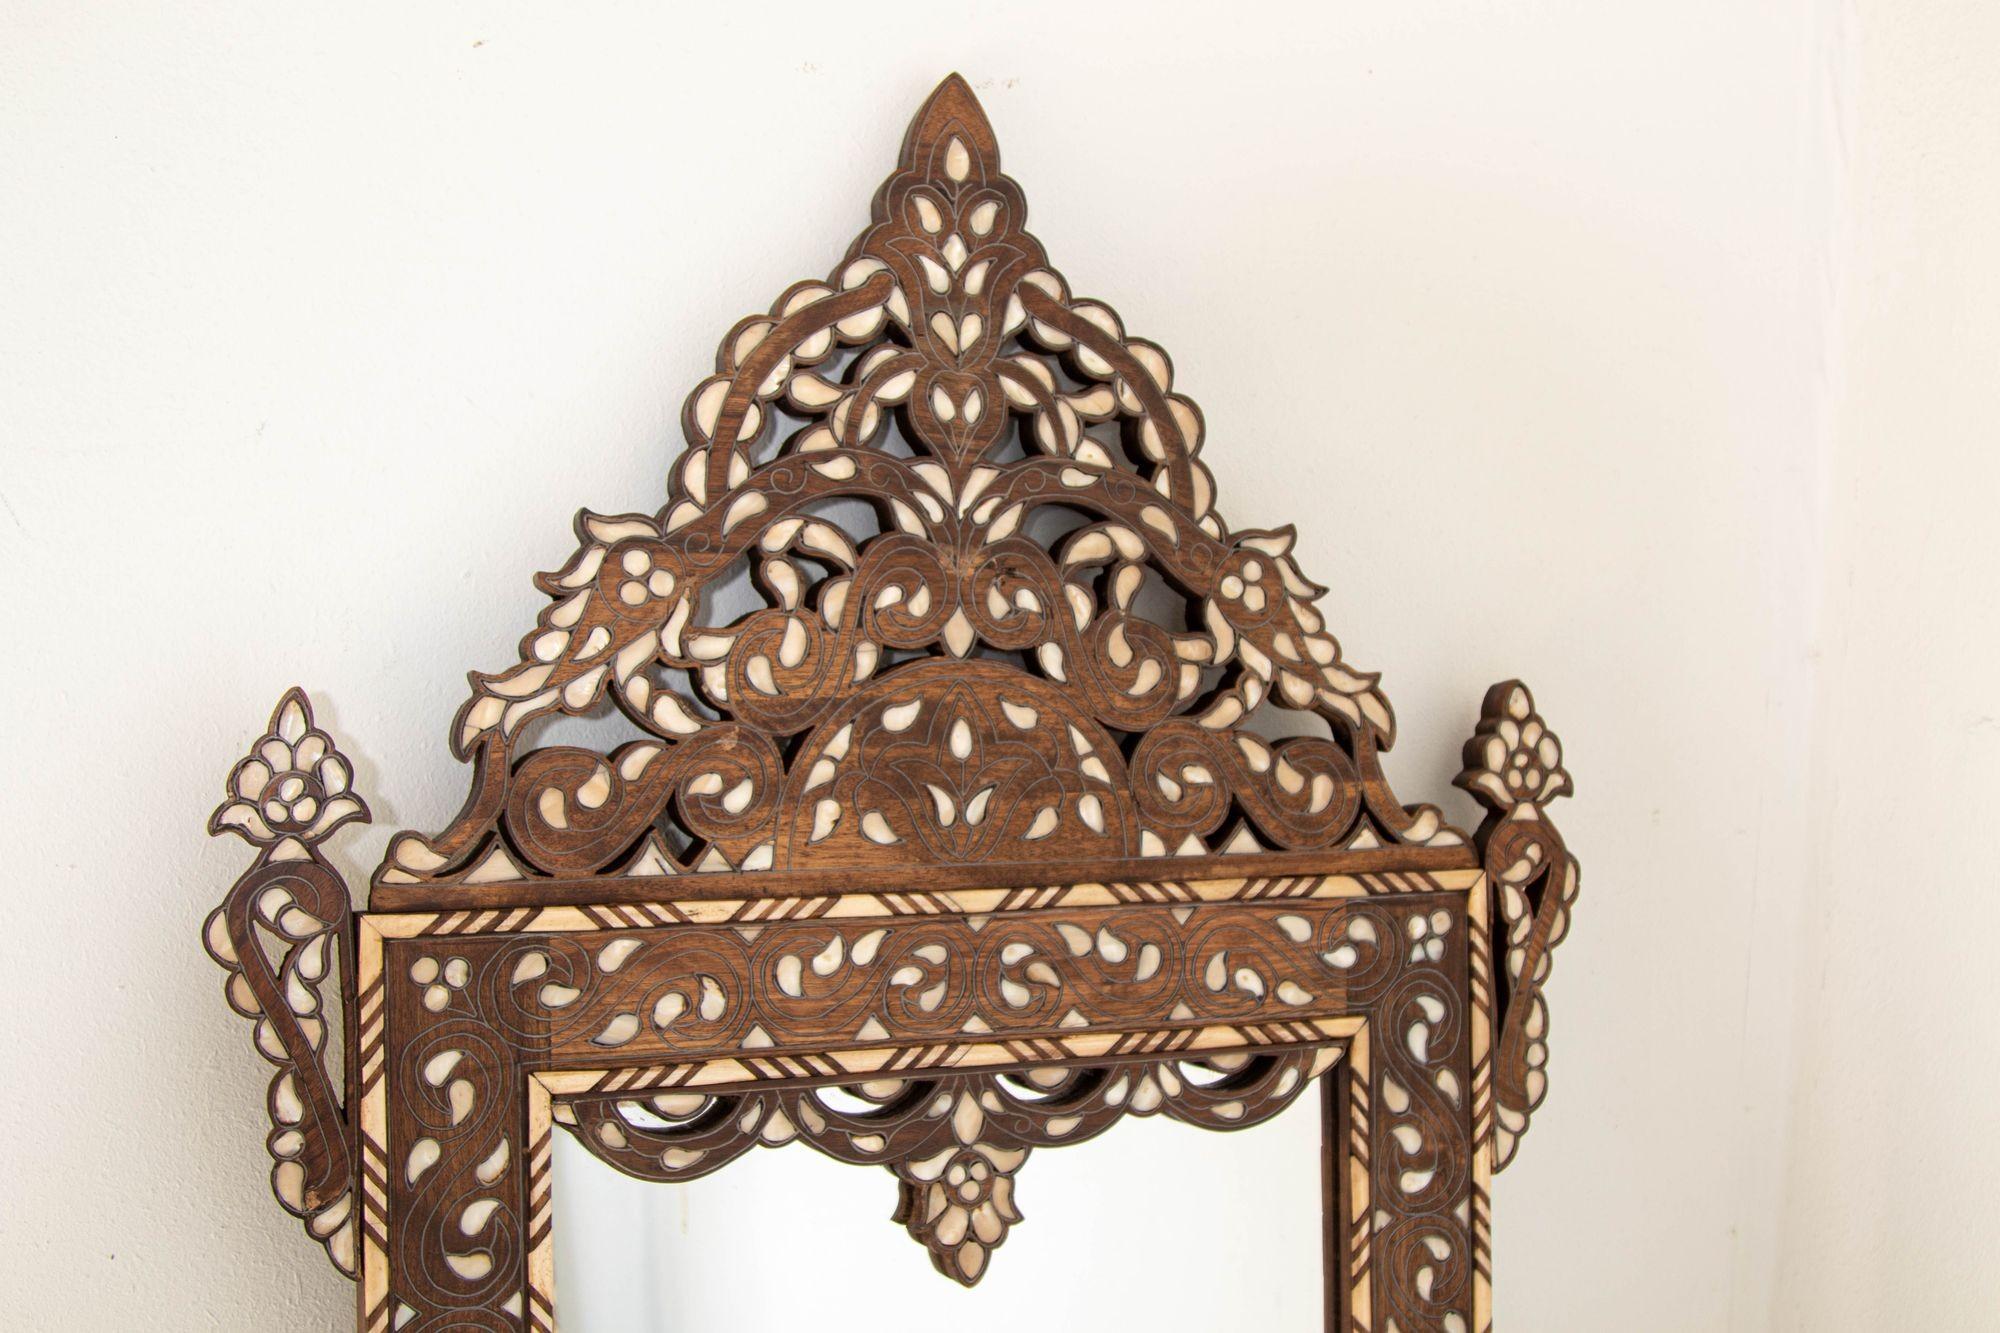 Moroccan Damascene Moorish Bone Inlaid Mirrors With Floral Motif 52